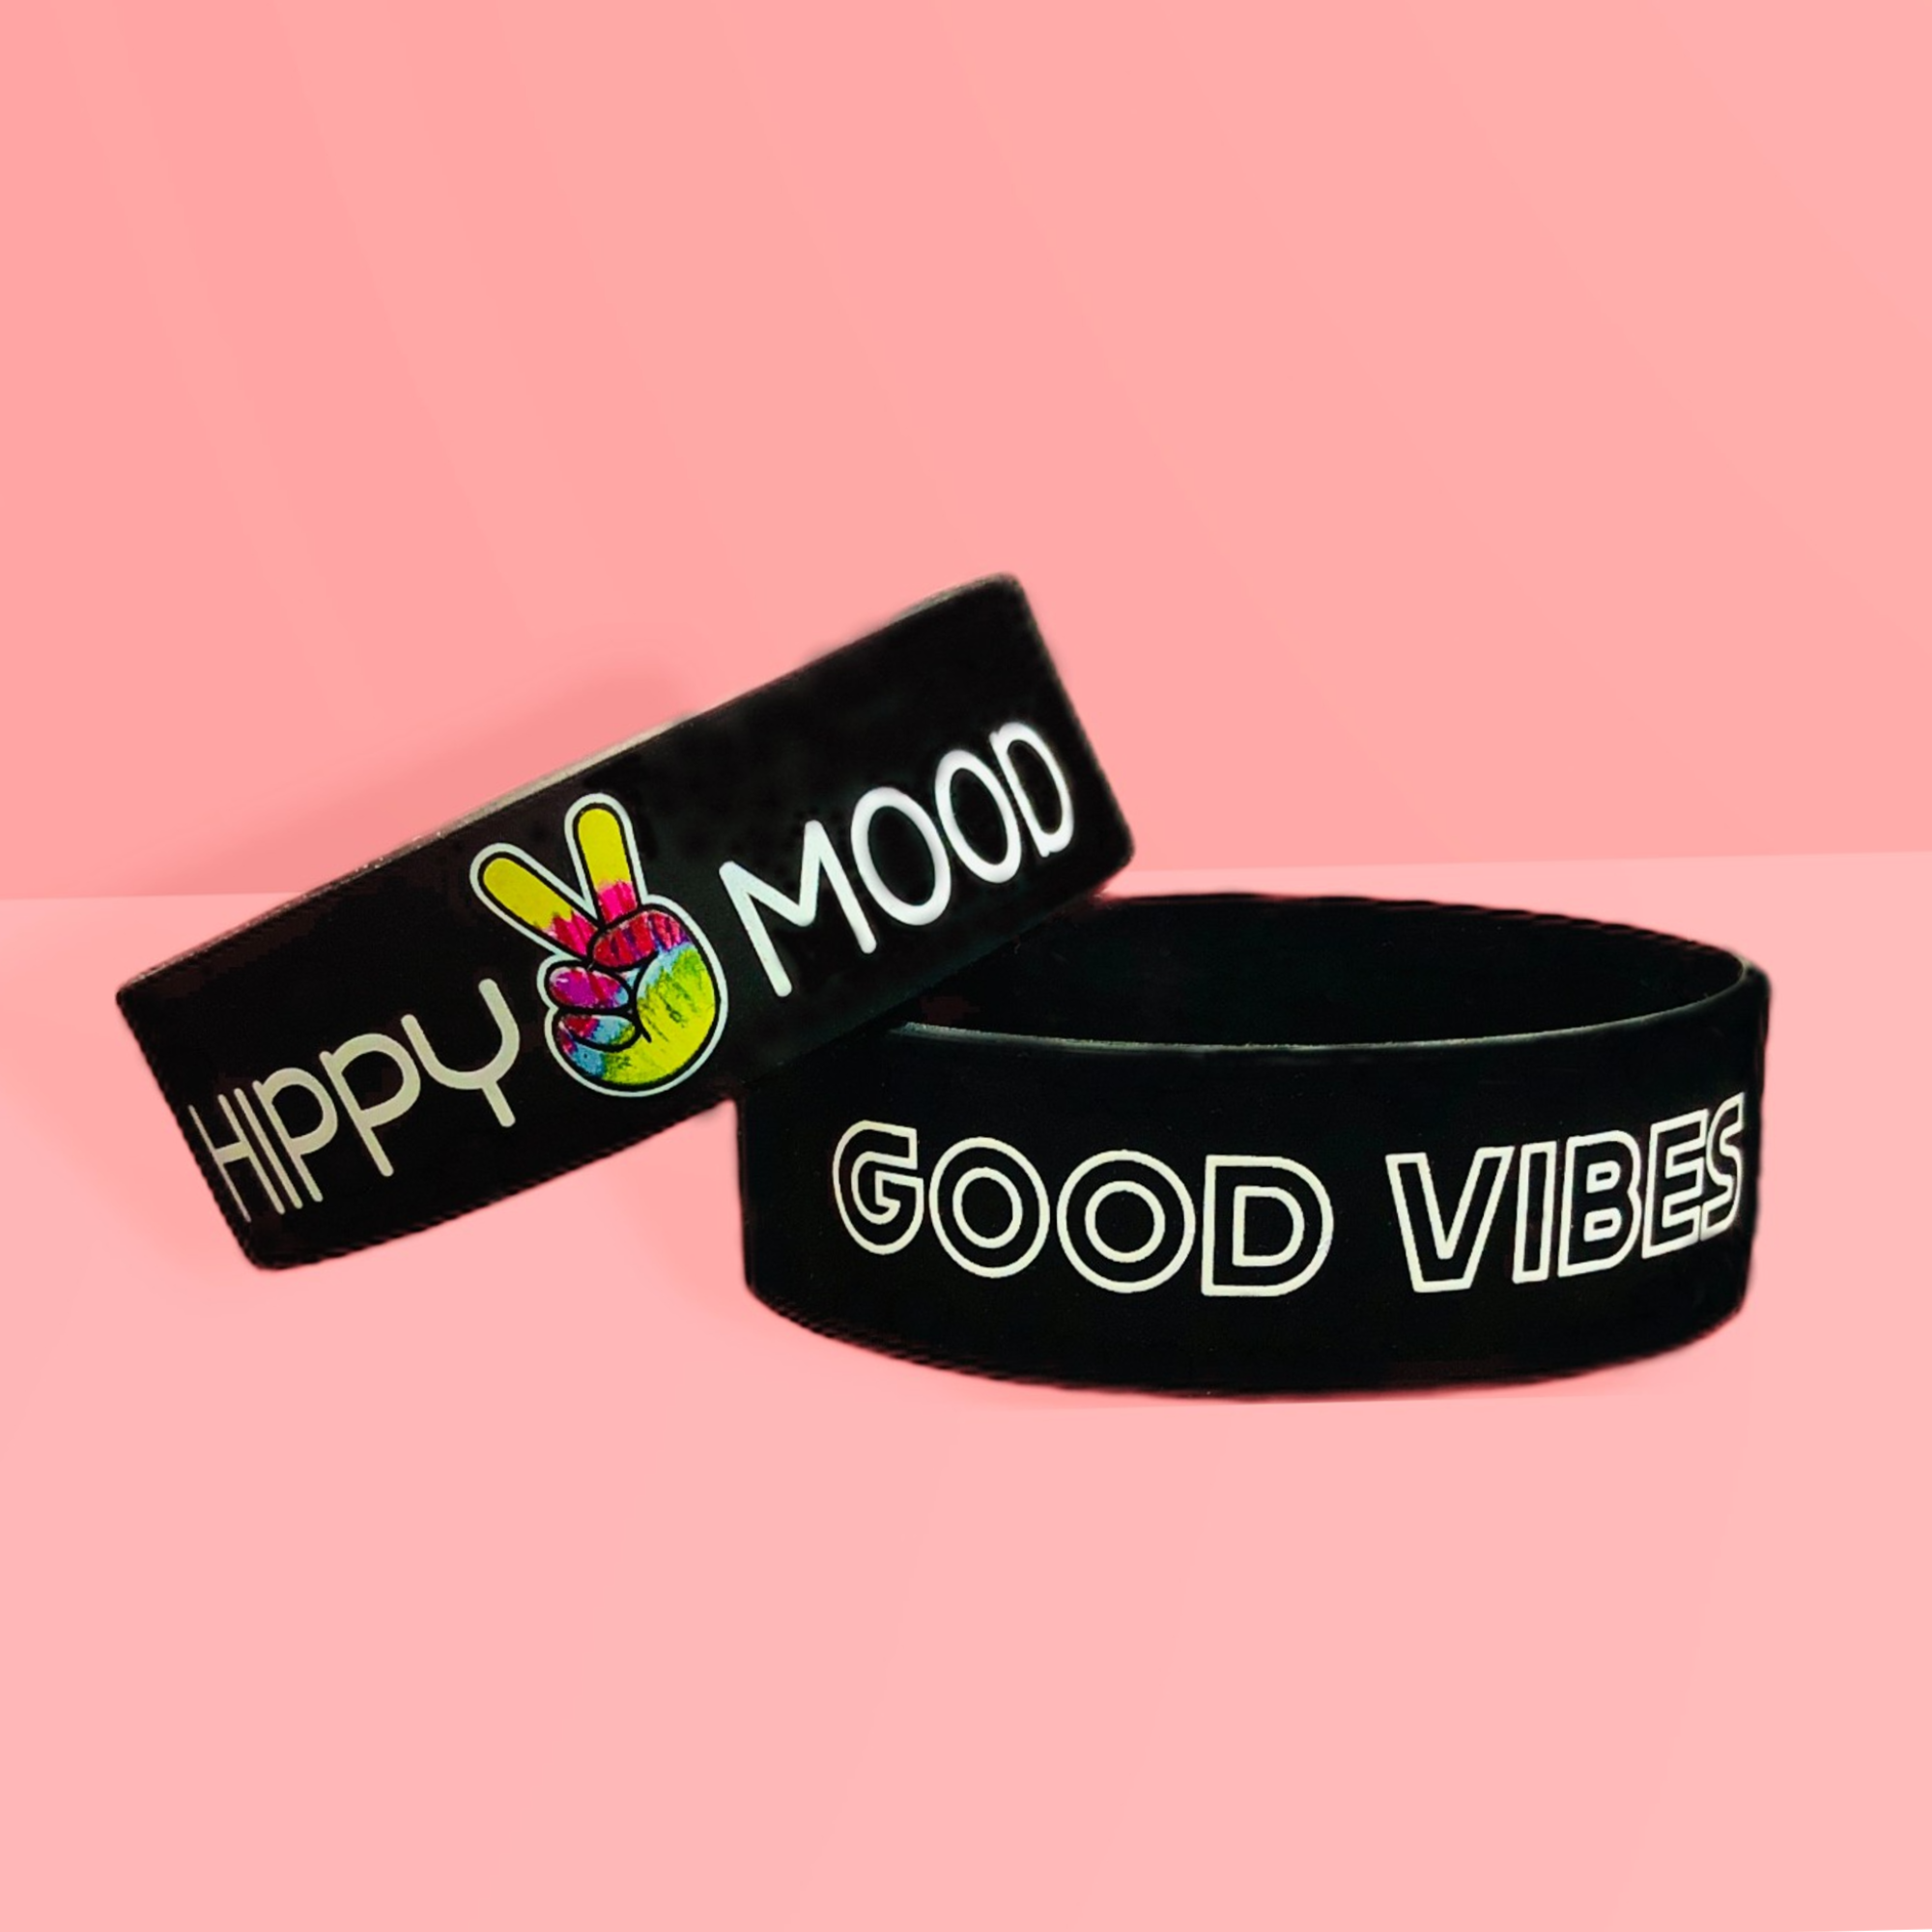  vibrant hippie bracelets